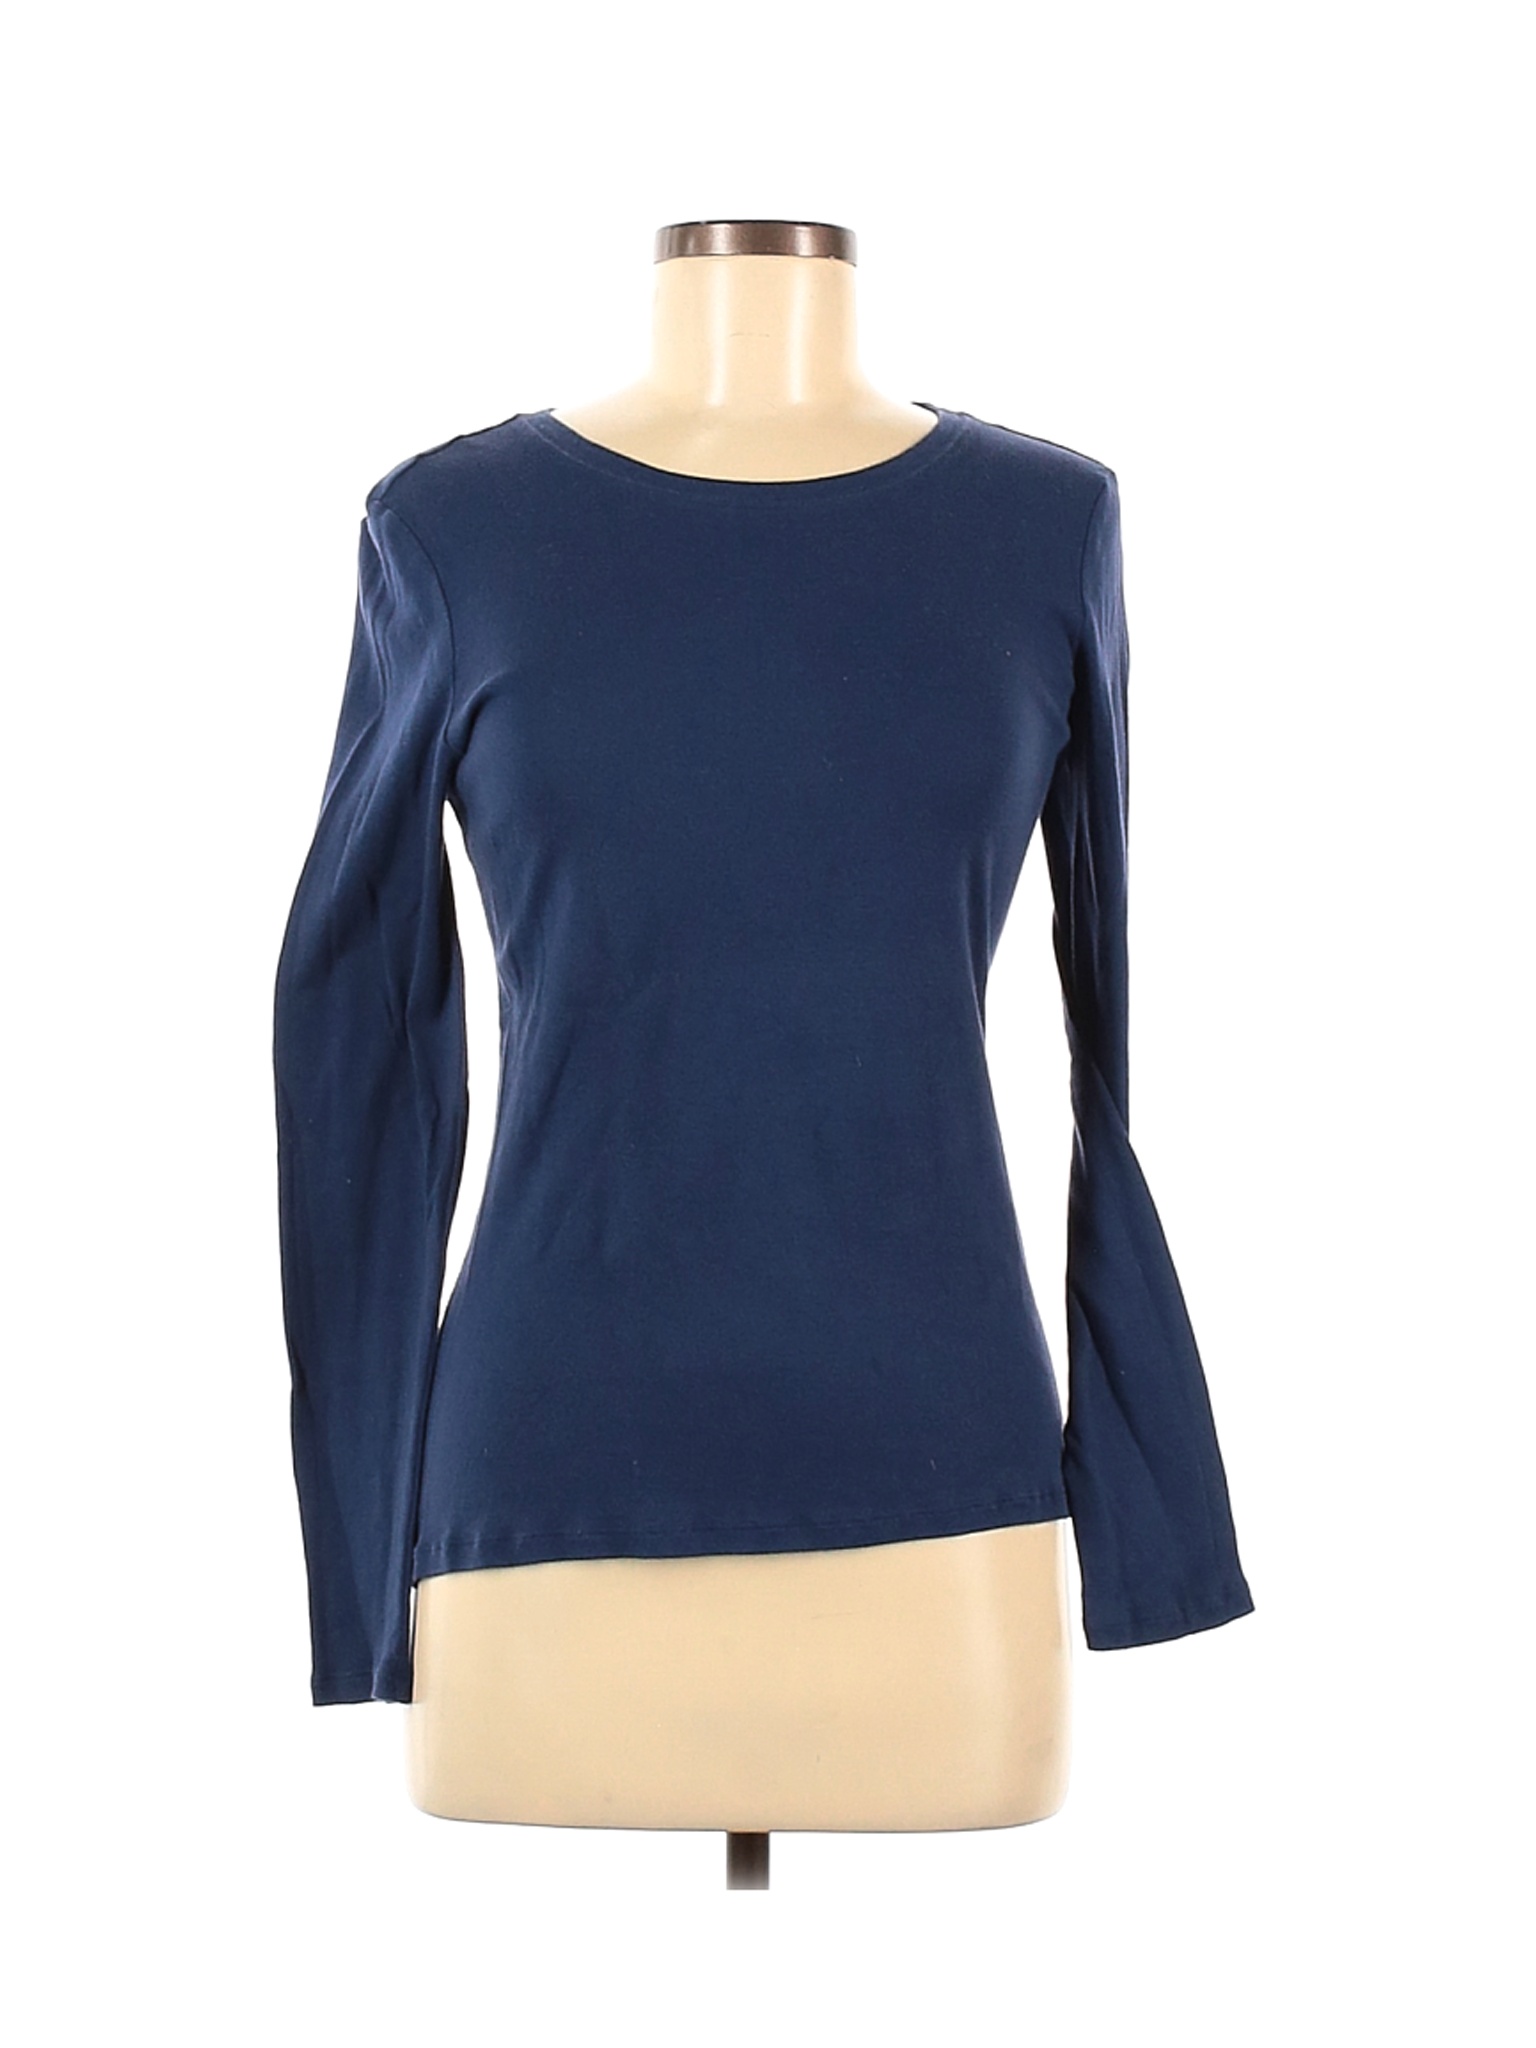 Old Navy Women Blue Long Sleeve T-Shirt M | eBay